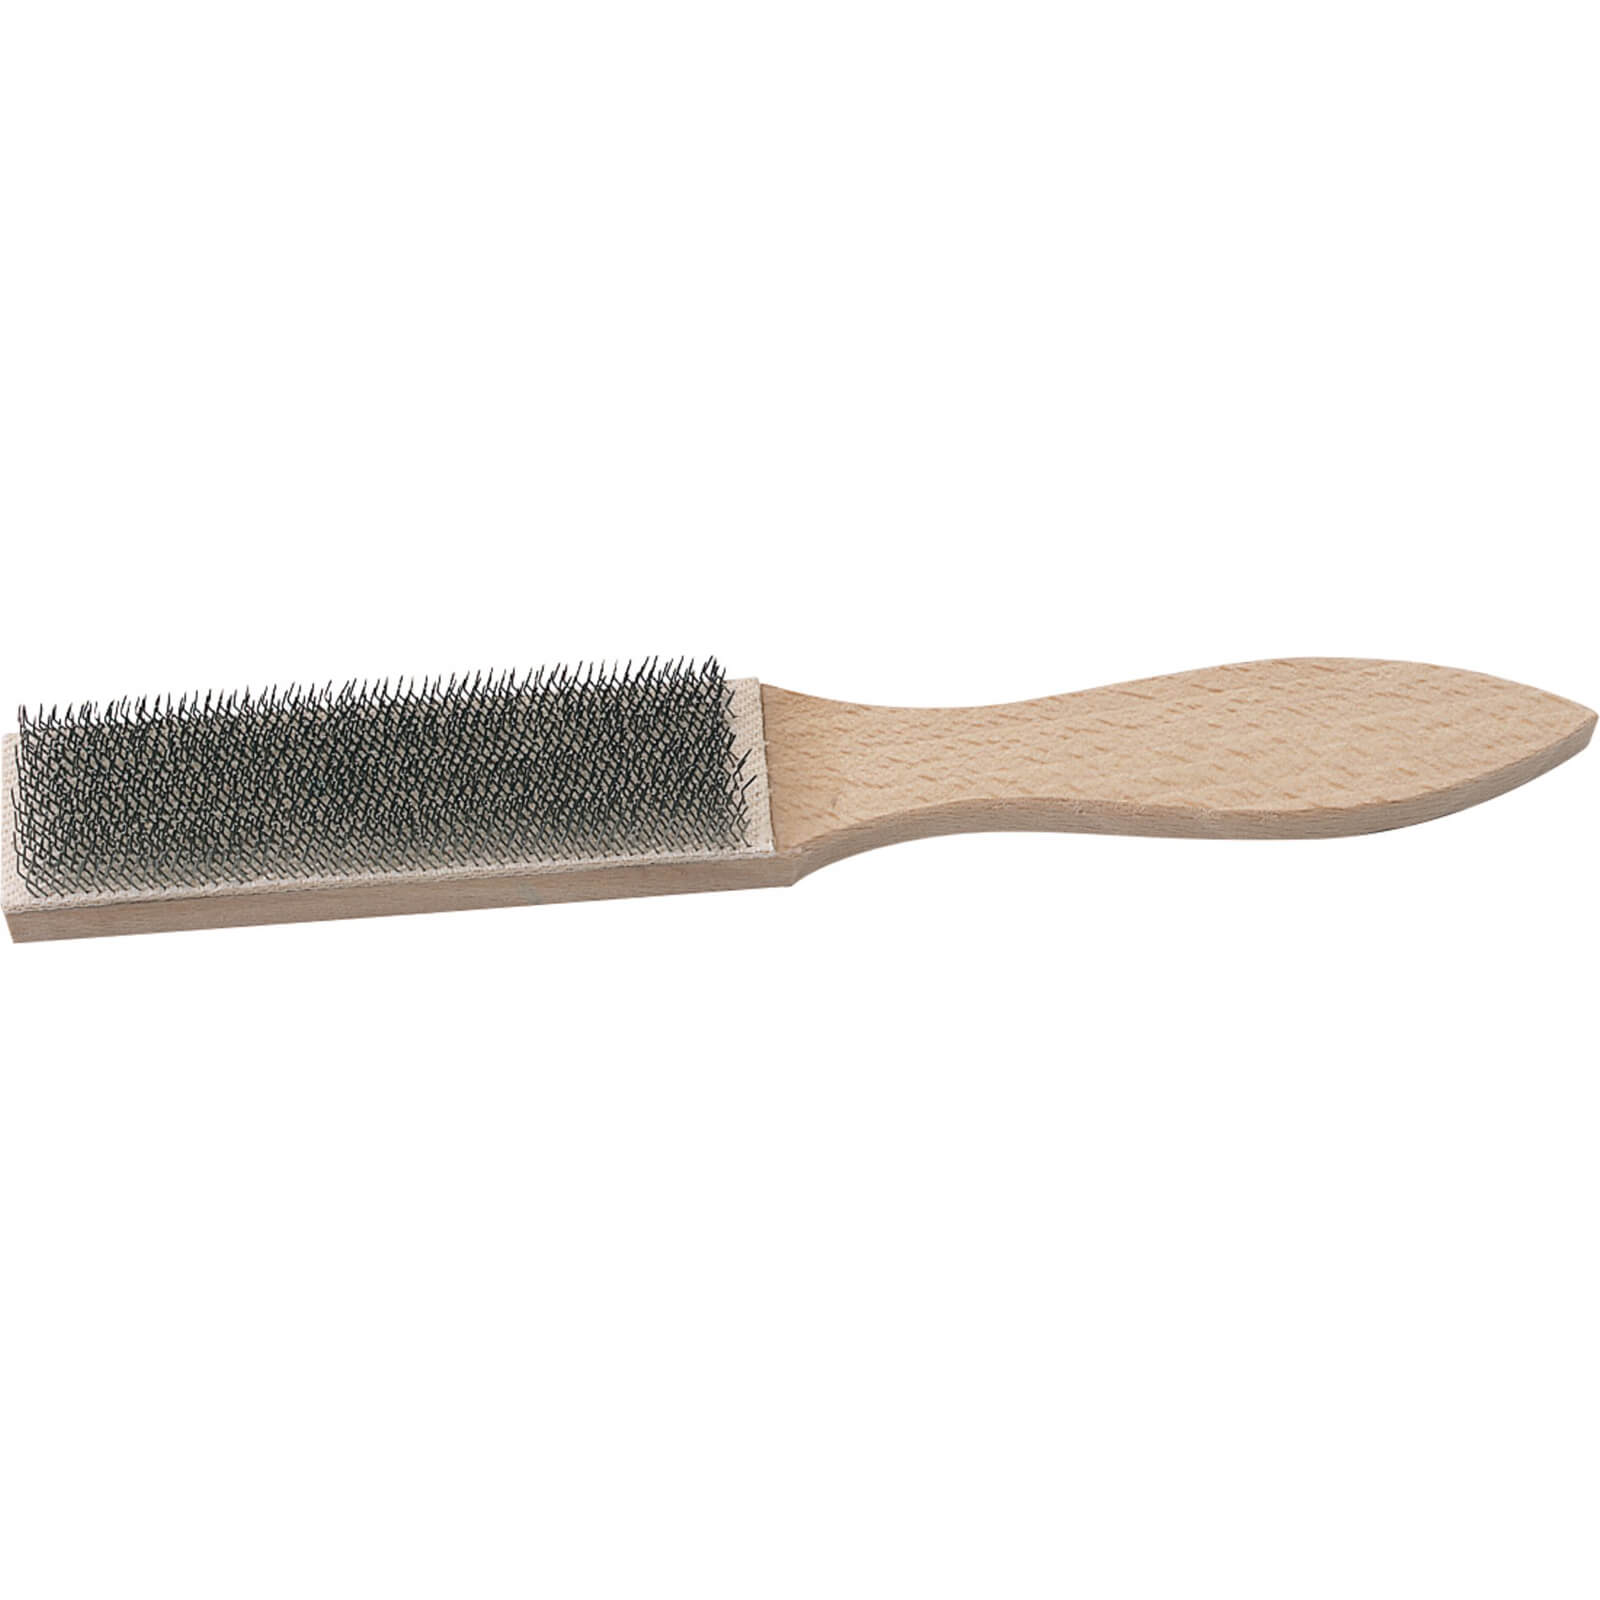 Photo of Draper File Cleaning Brush